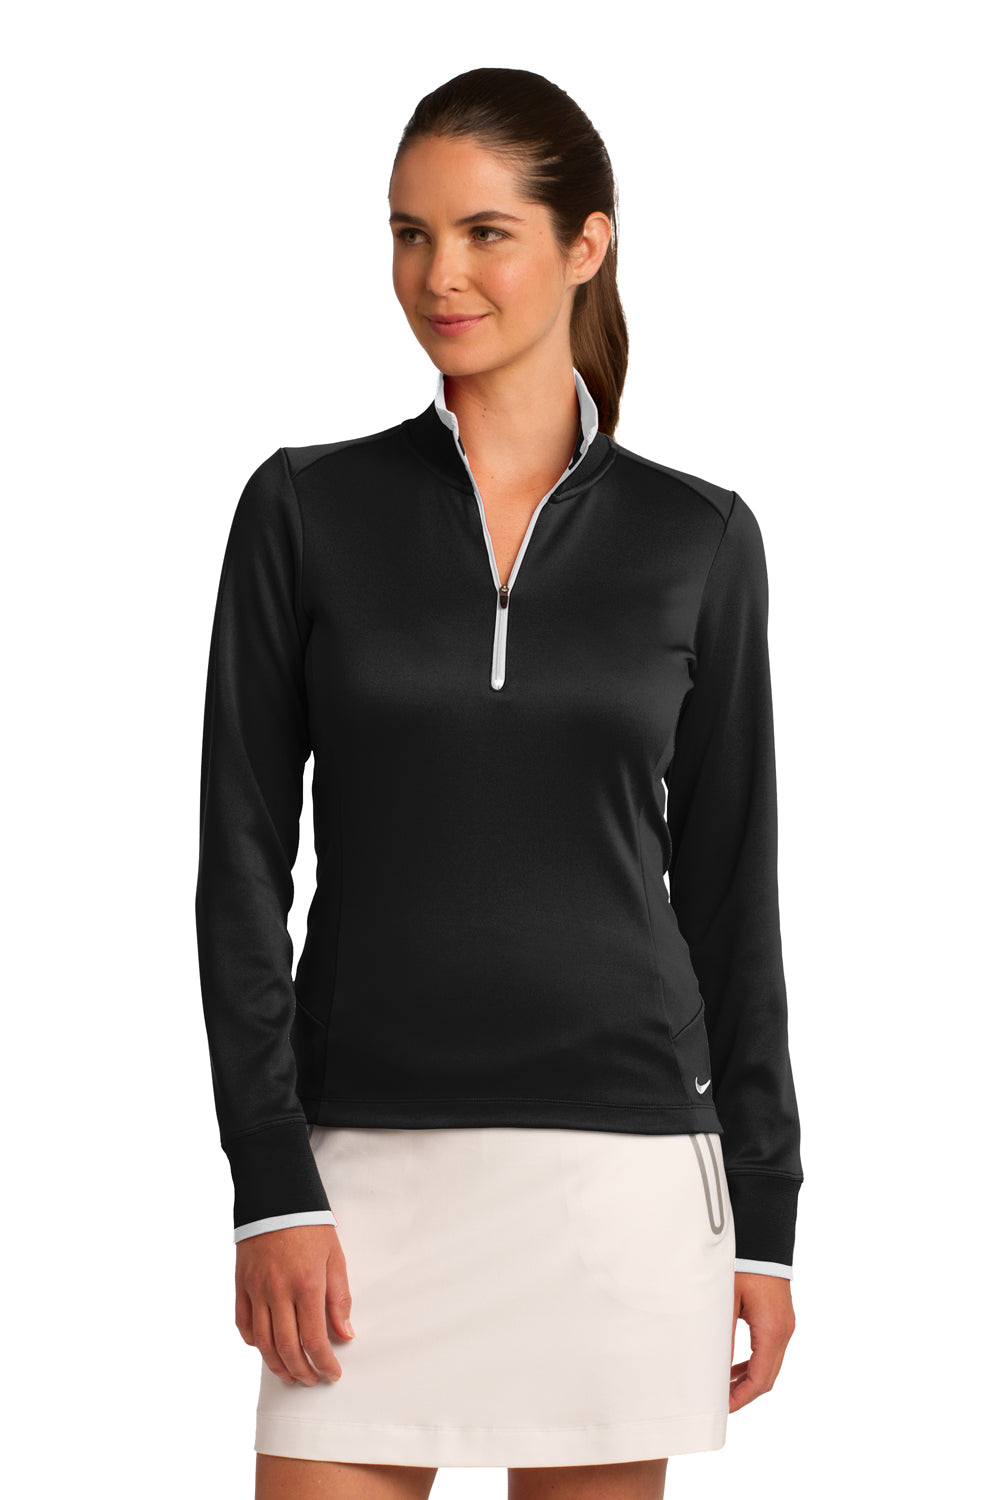 Nike 578674 Womens Dri-Fit Moisture Wicking 1/4 Zip Sweatshirt Black/White Model Front